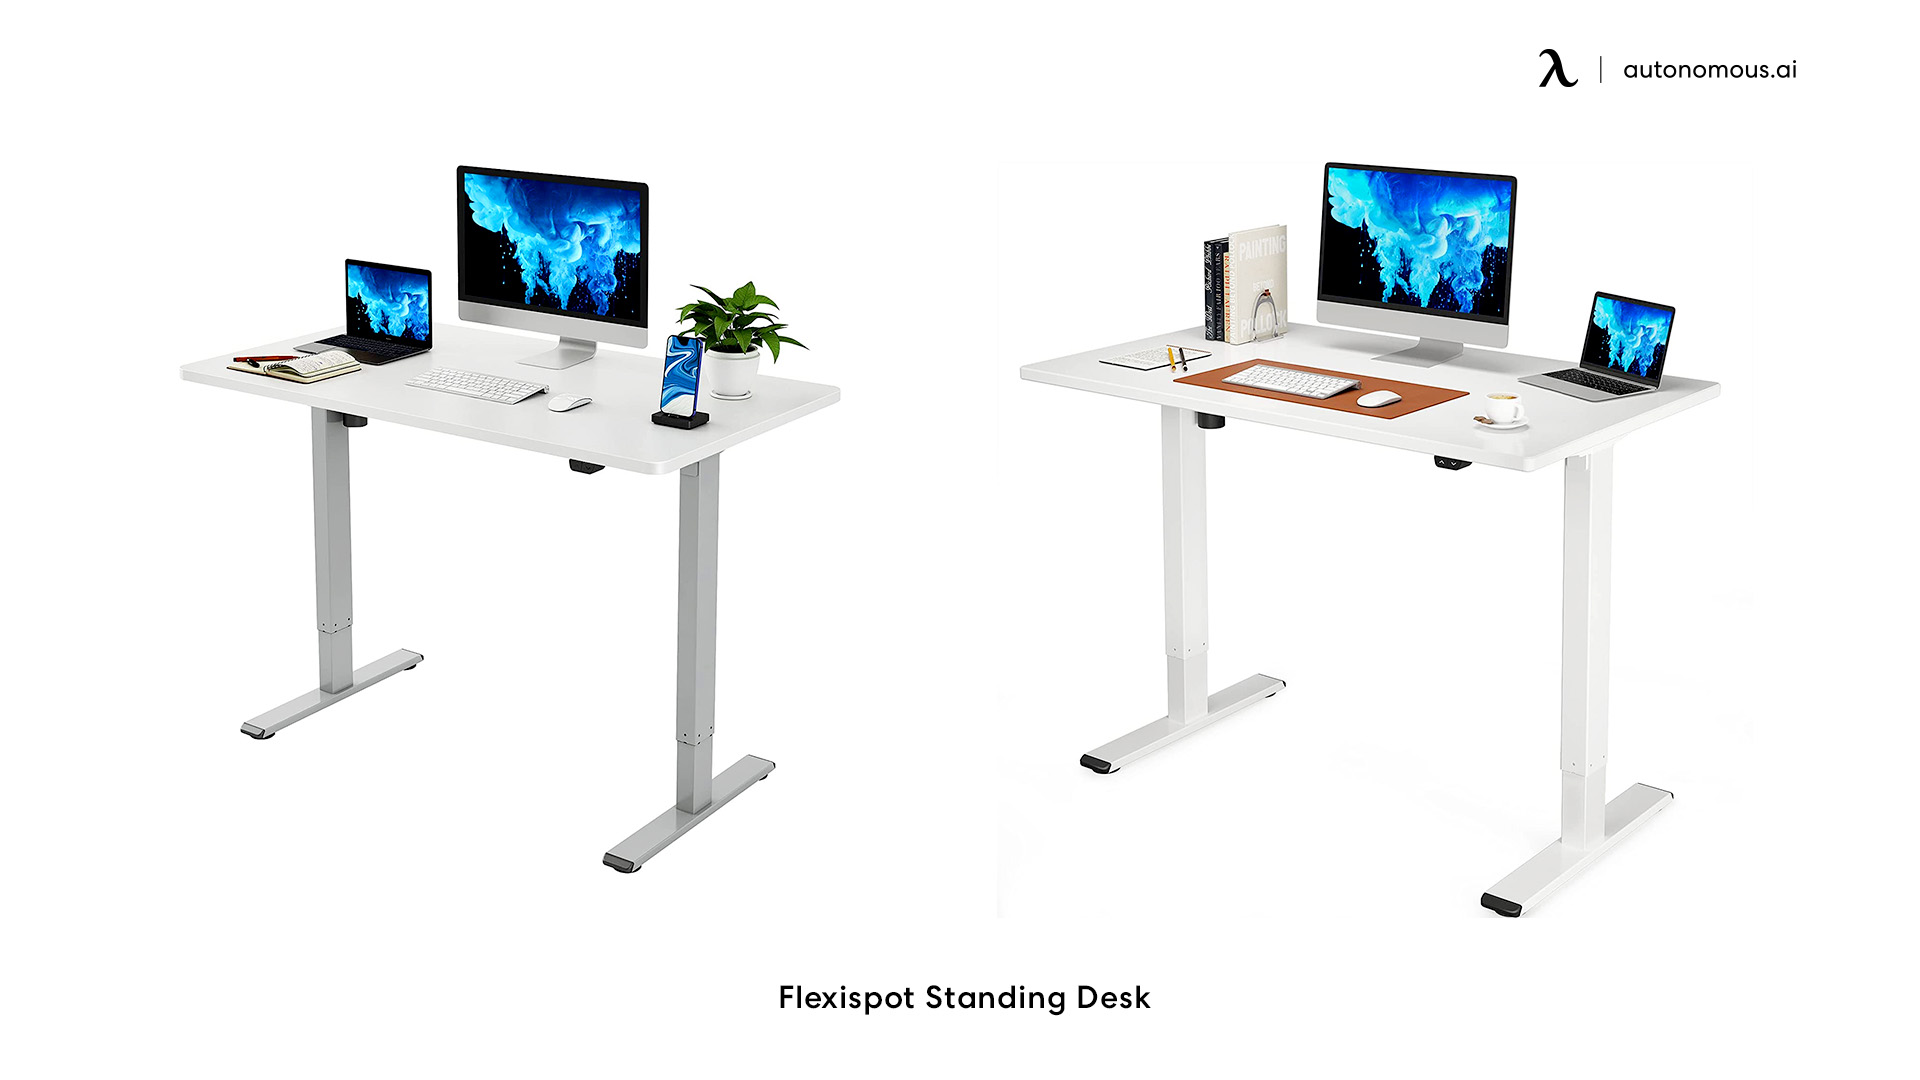 Standing working desk by Flexispot